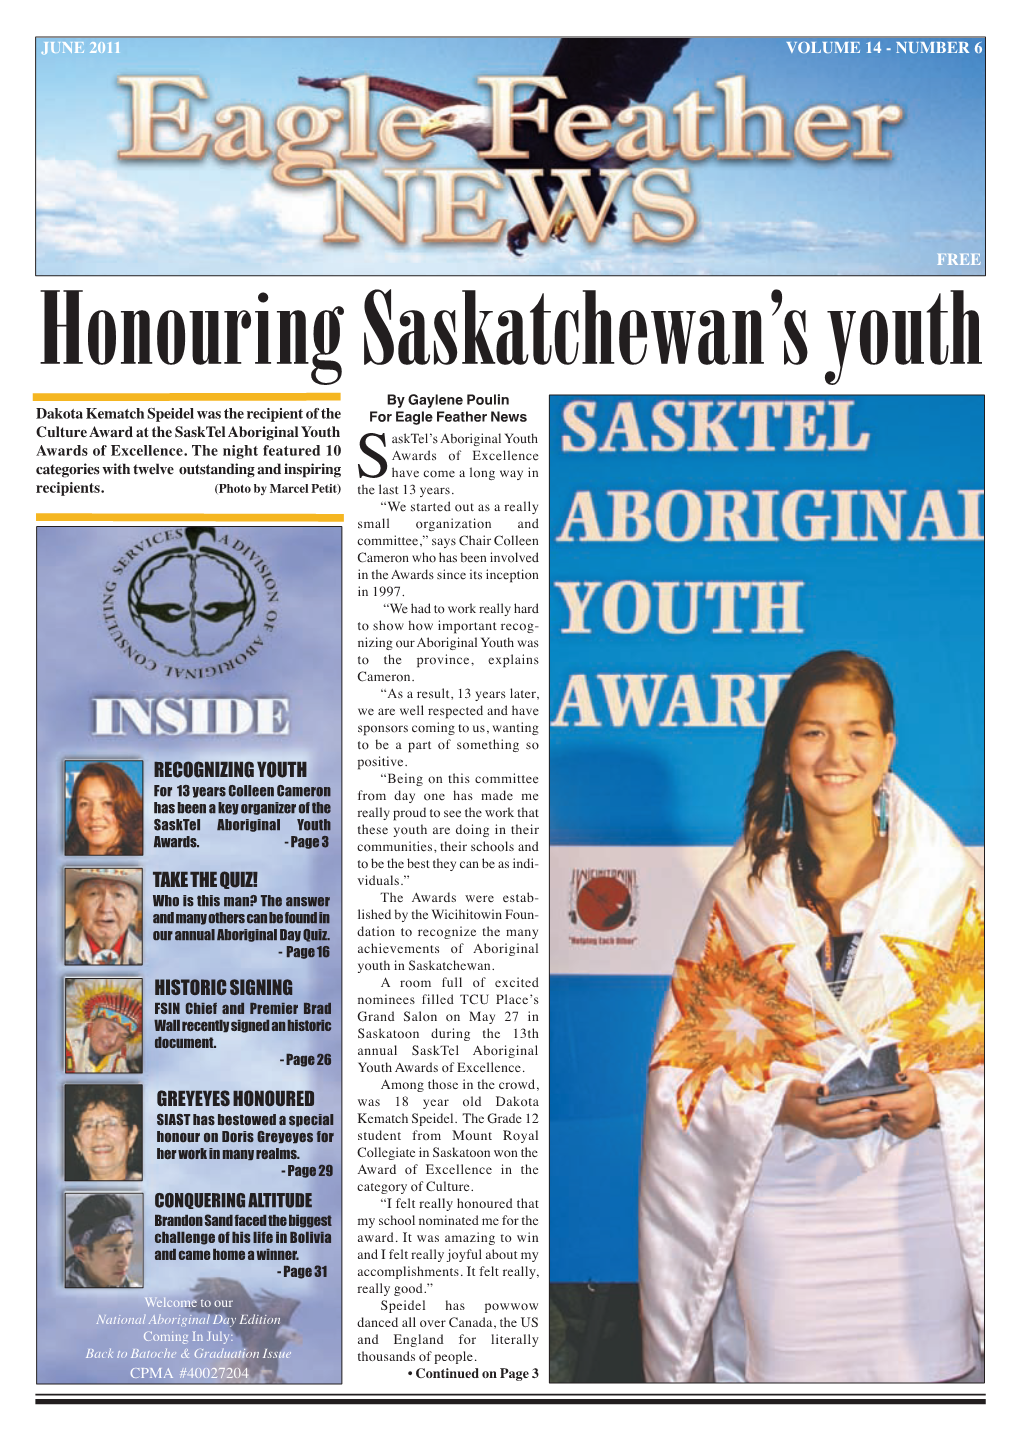 Honouring Saskatchewan's Youth